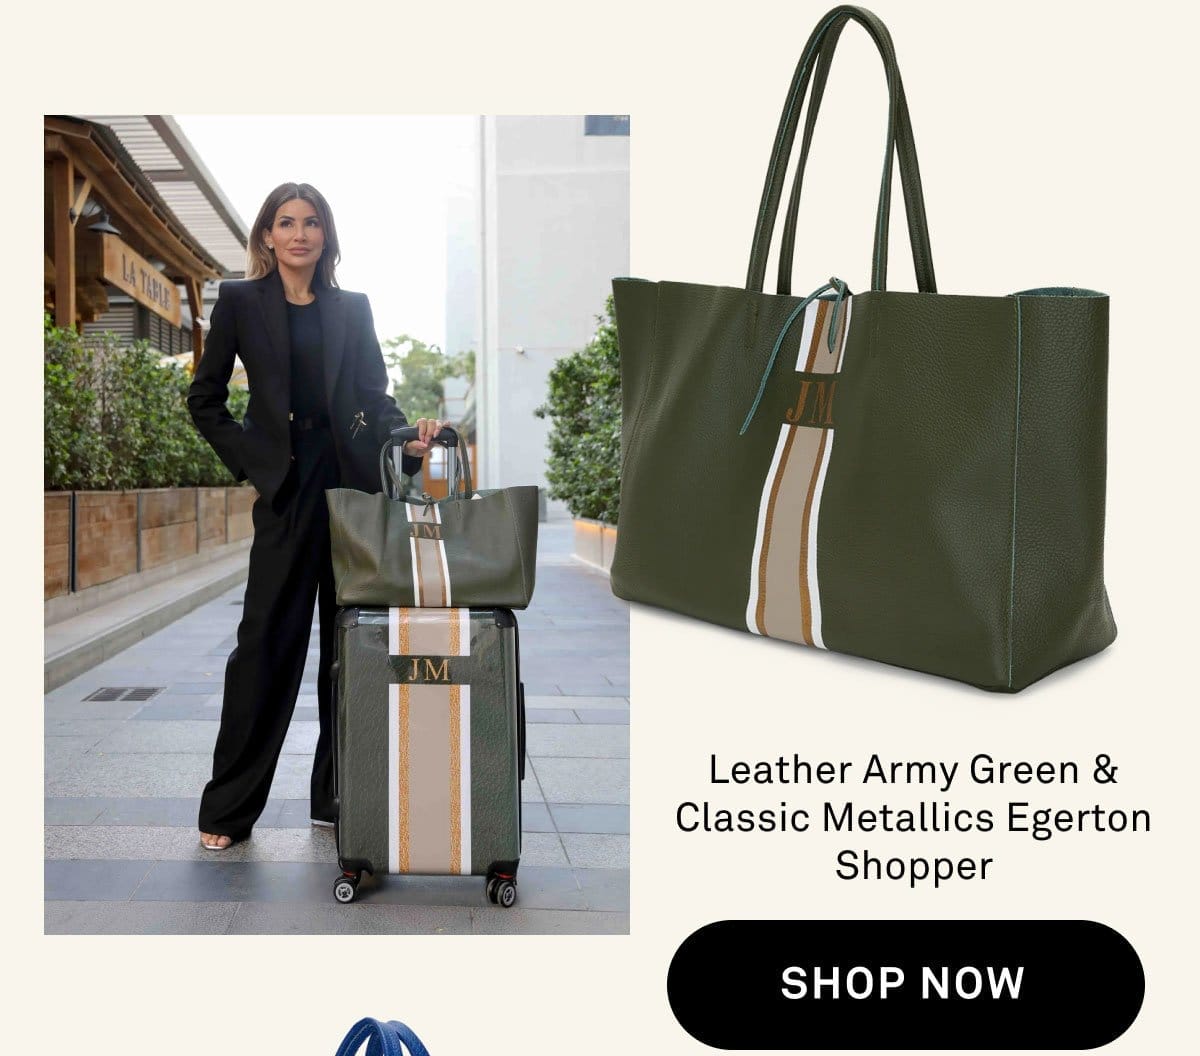 Leather Army Green & Classic Metallics Egerton Shopper